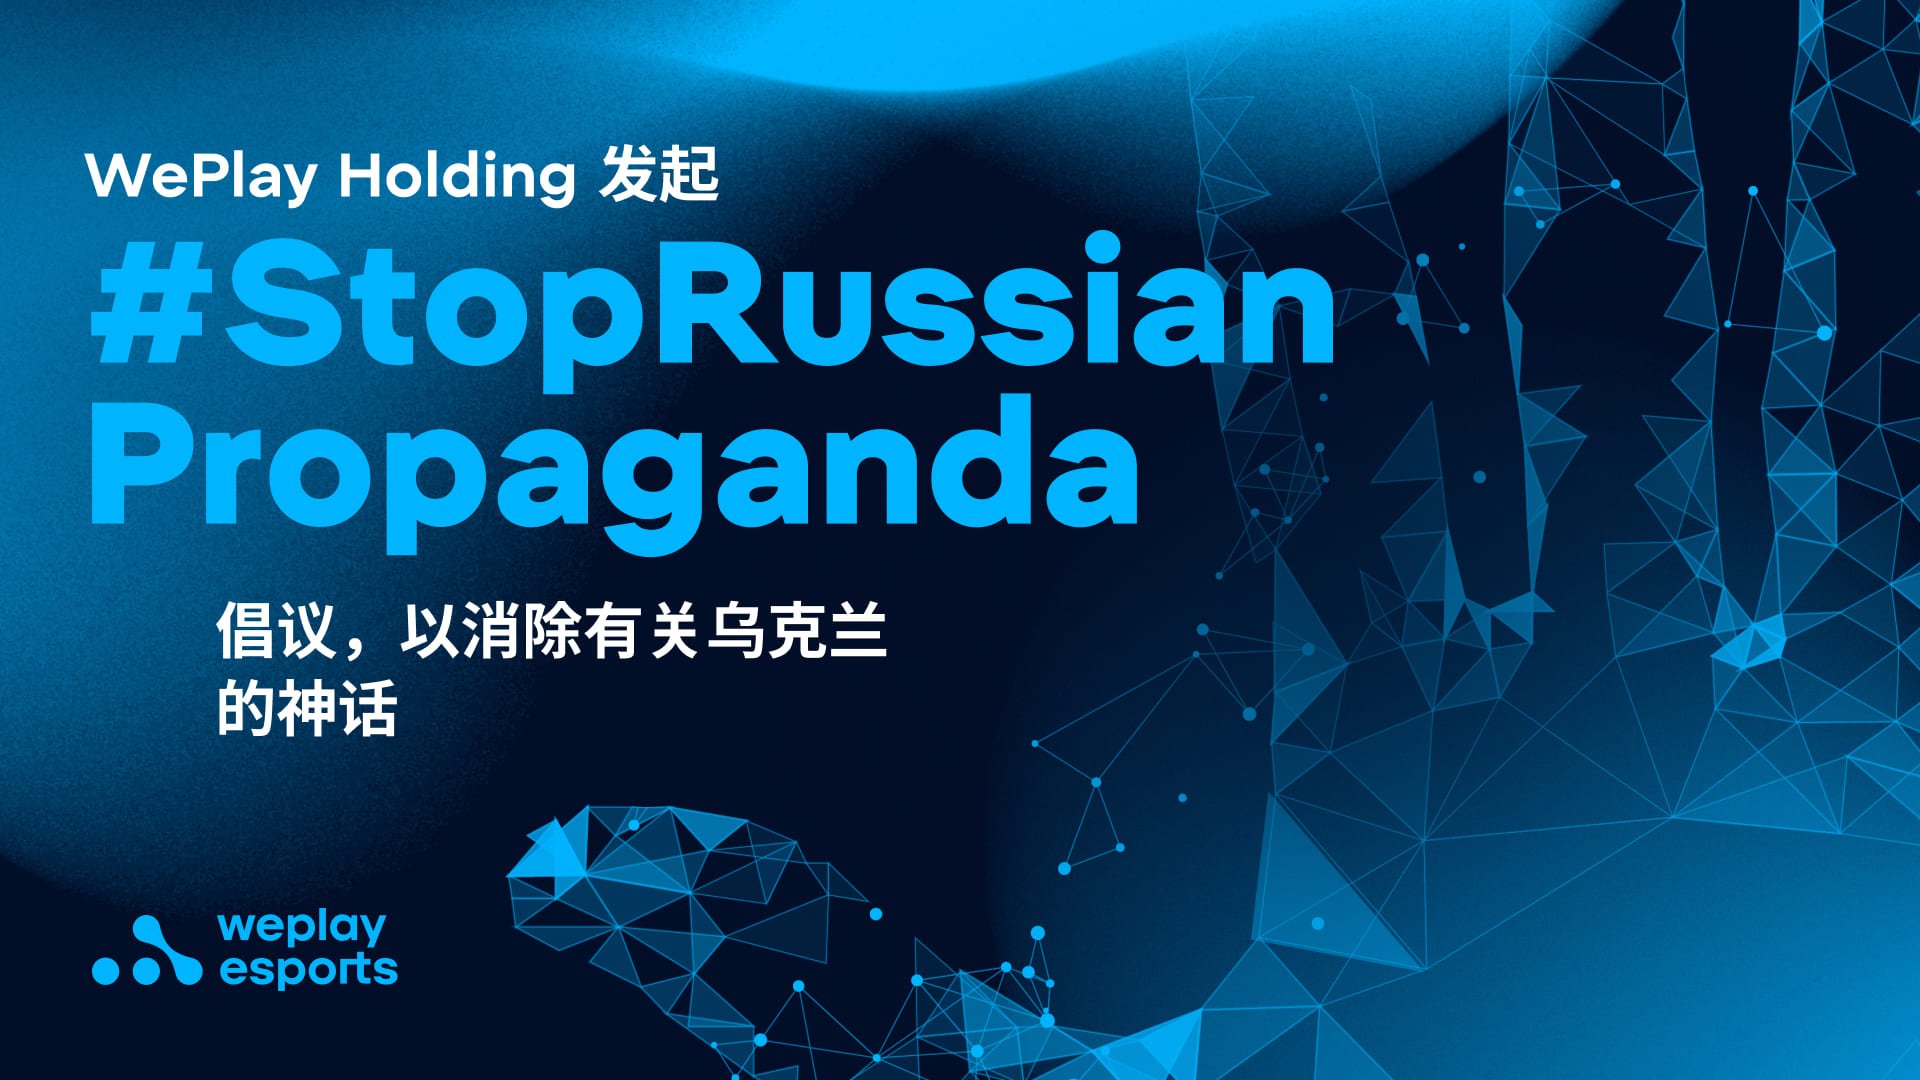 WePlay Holding 发起 #StopRussianPropaganda 倡议，以消除有关乌克兰的神话。 图像：WePlay Holding